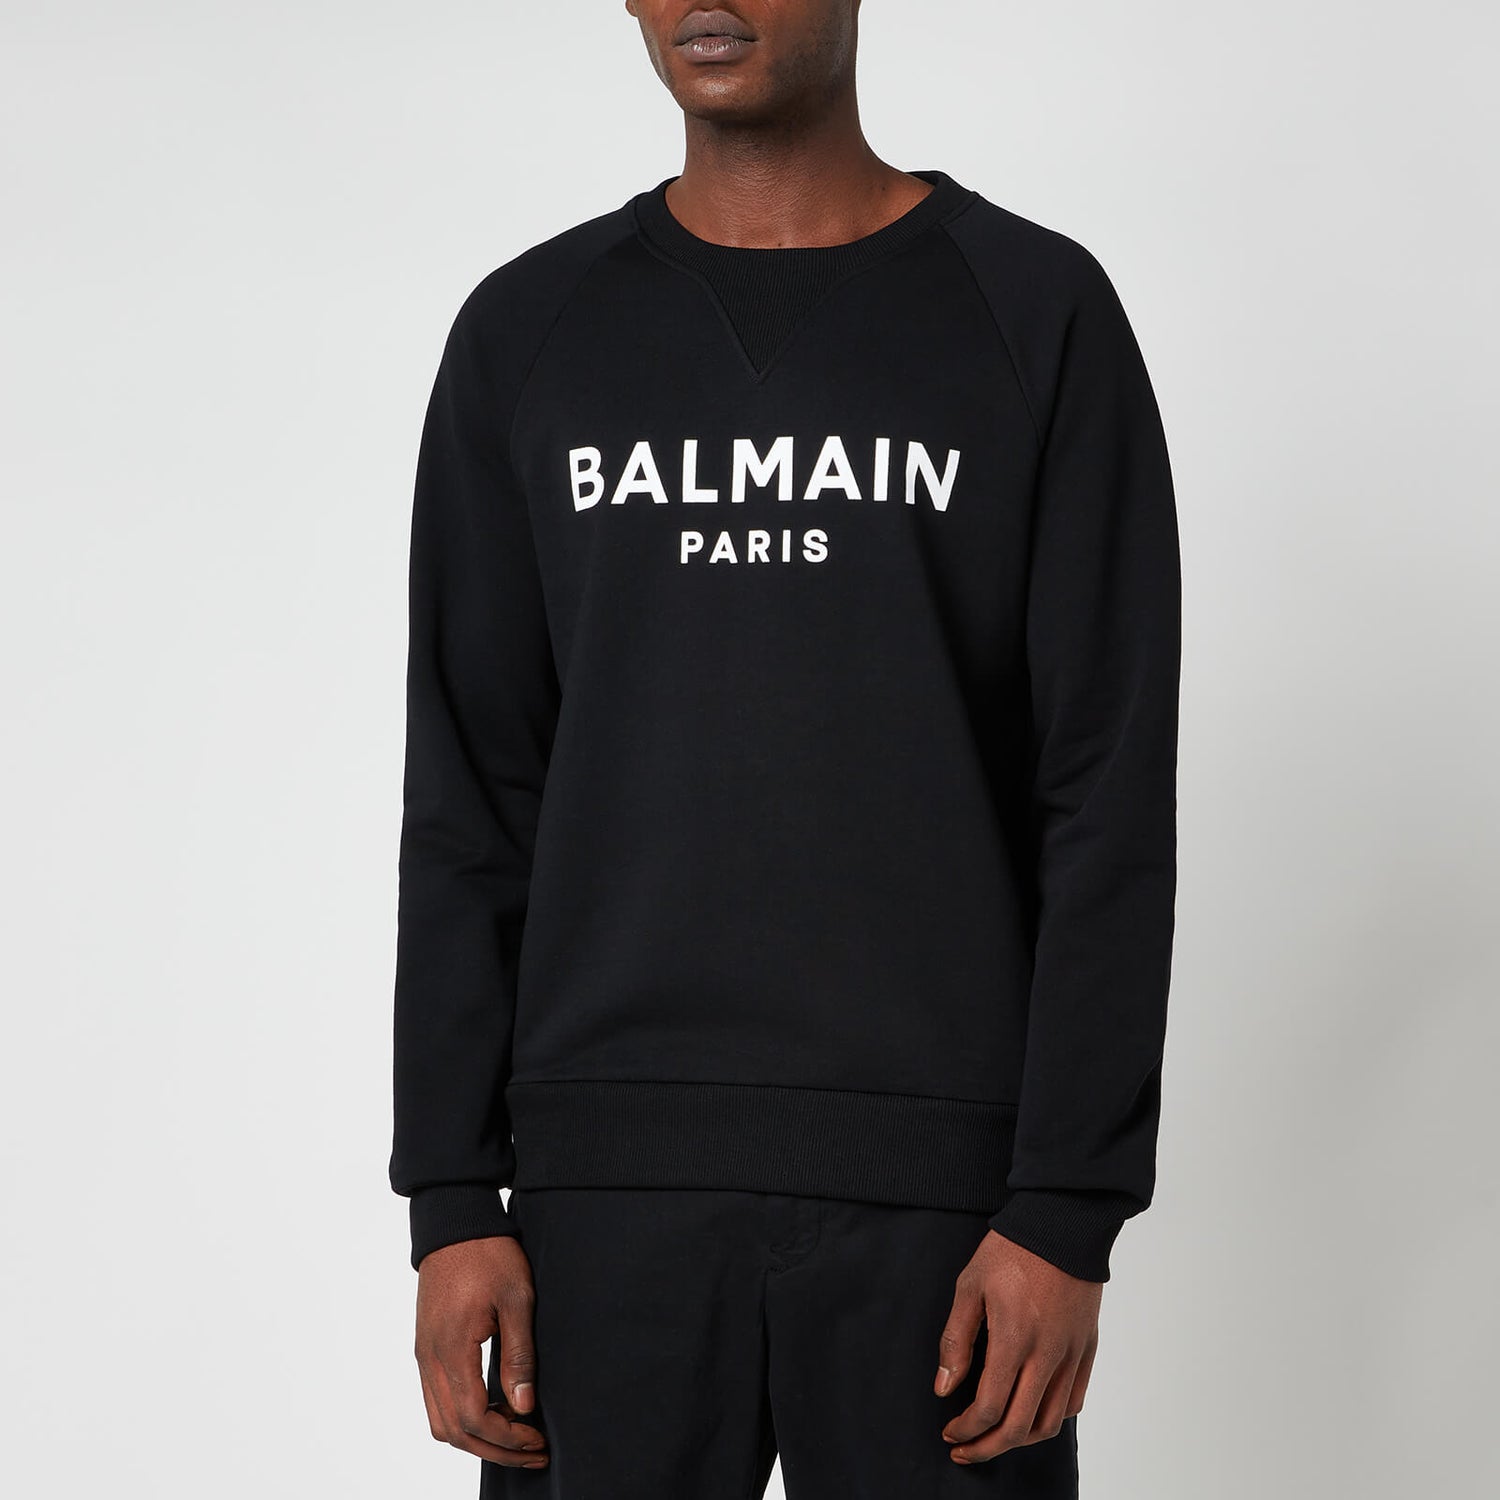 Balmain Men's Printed Sweatshirt - Black/White - S